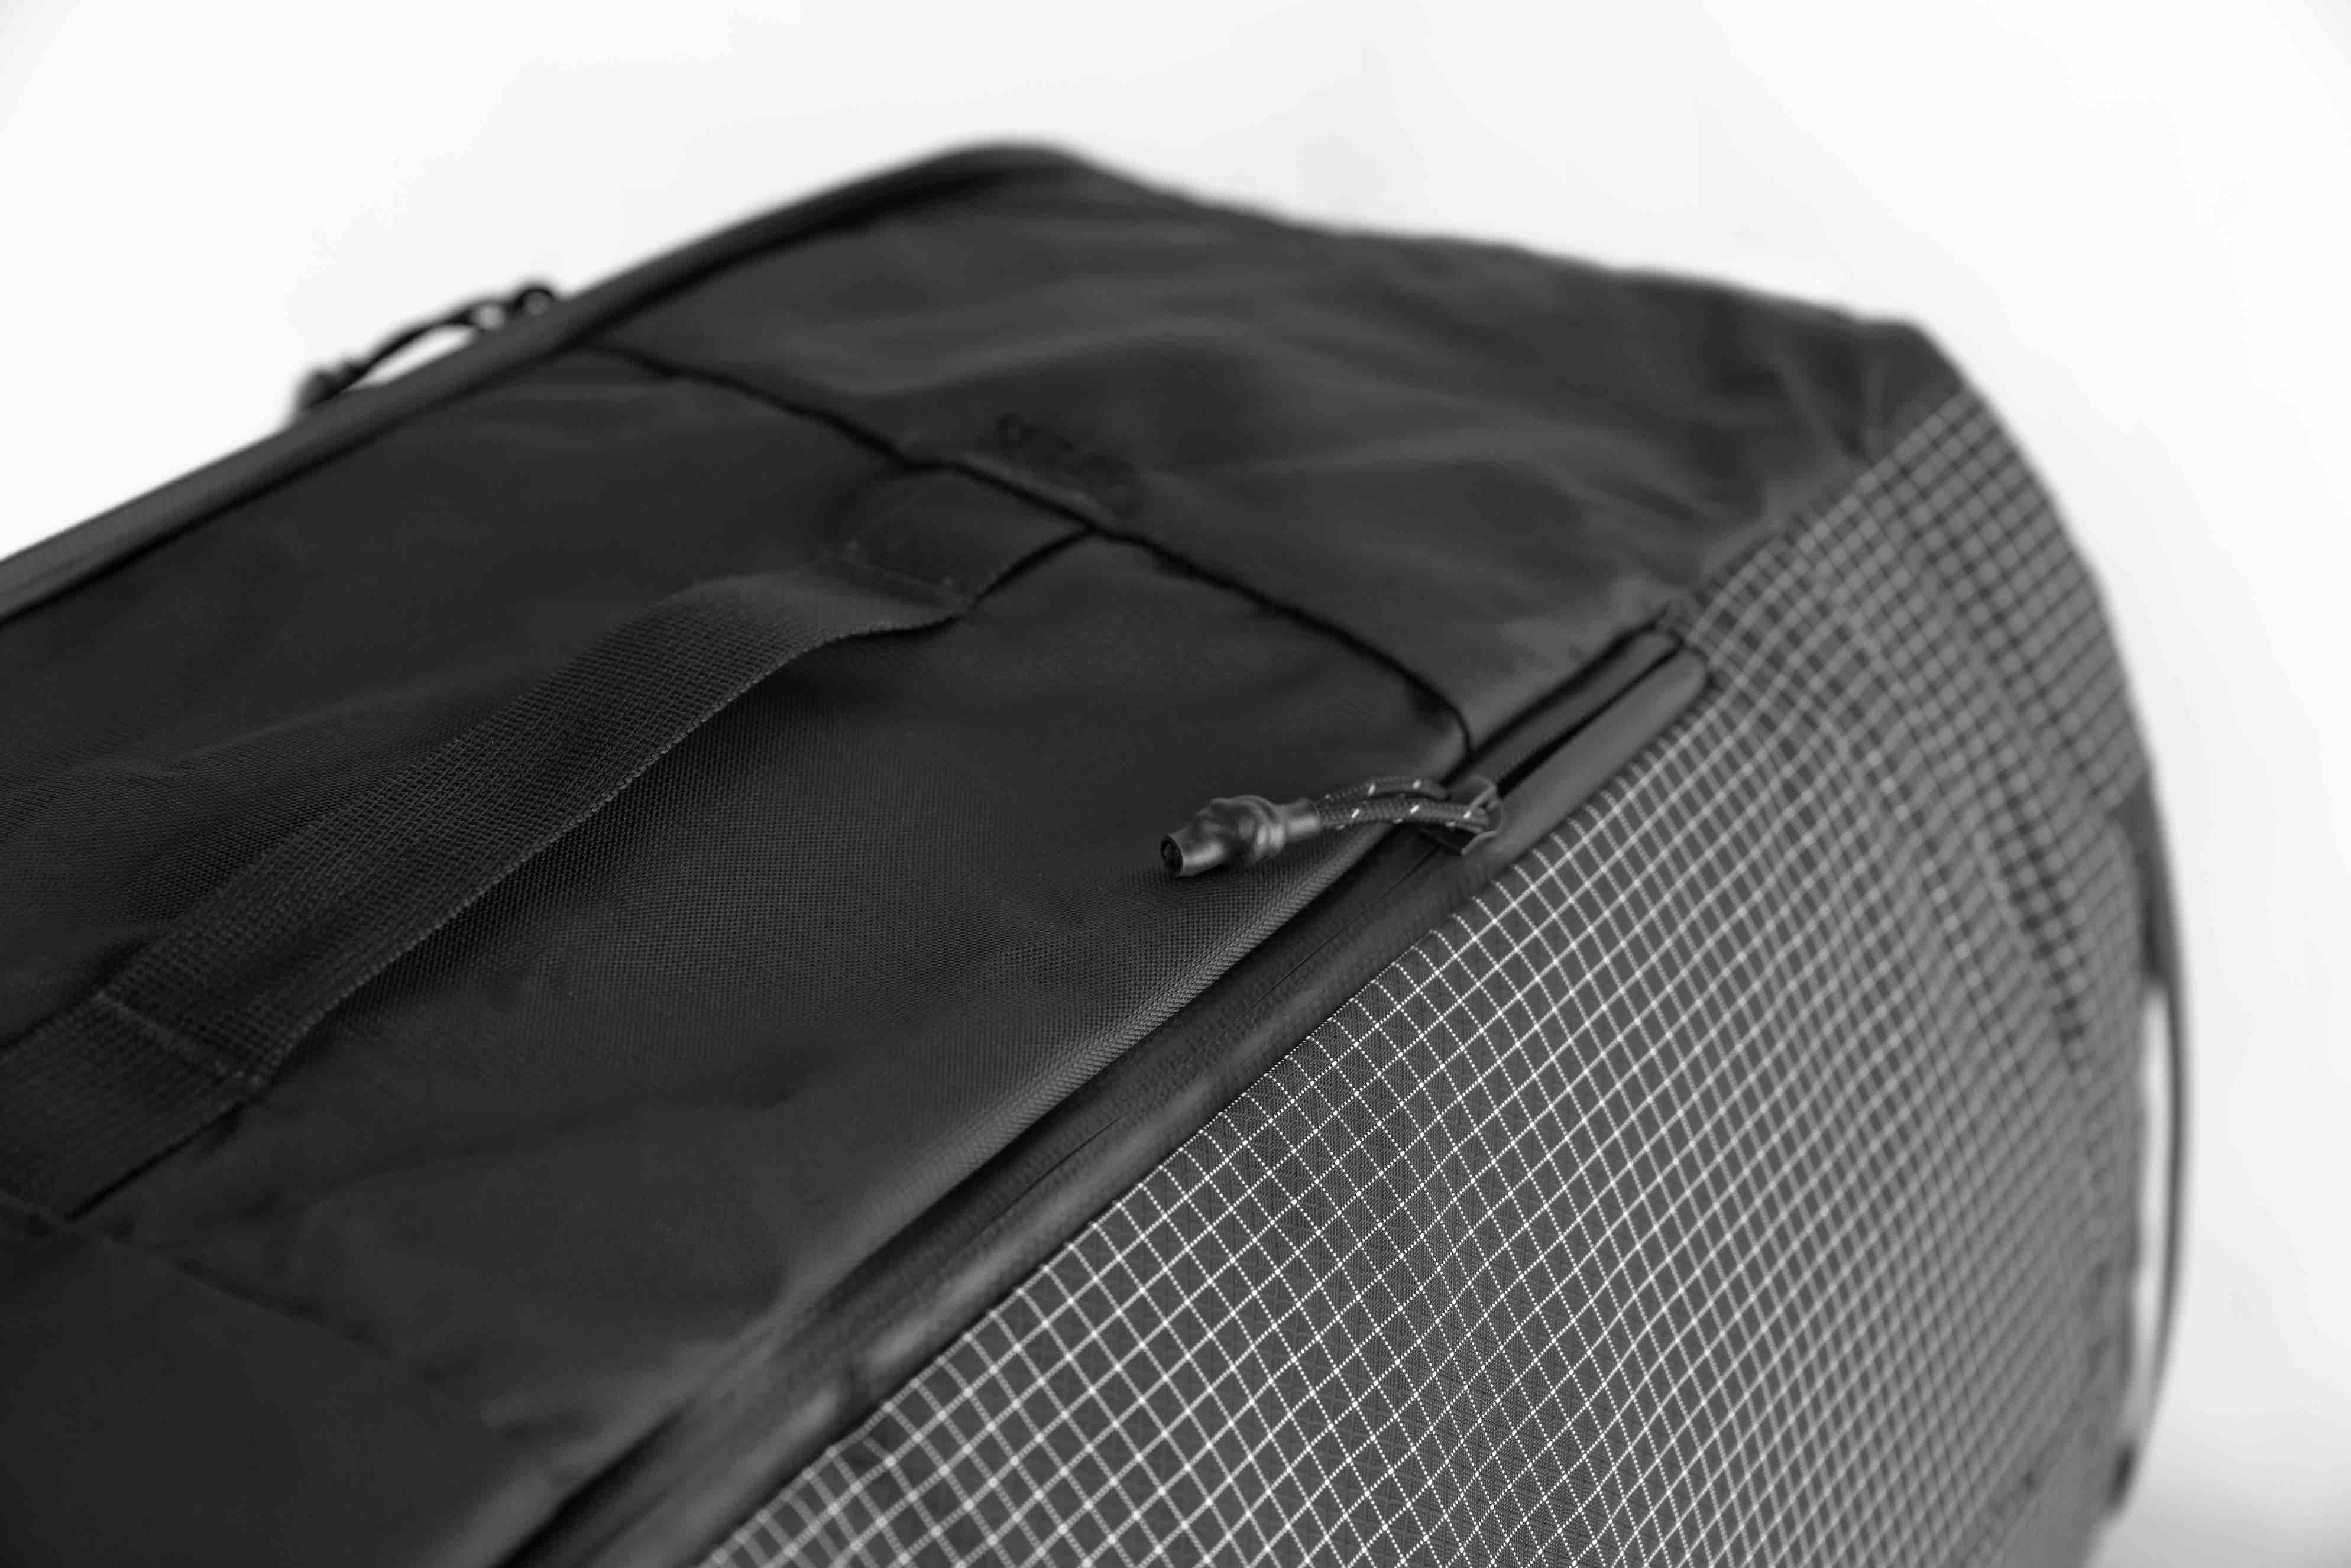 Matador SEG45 Travel Pack (black)